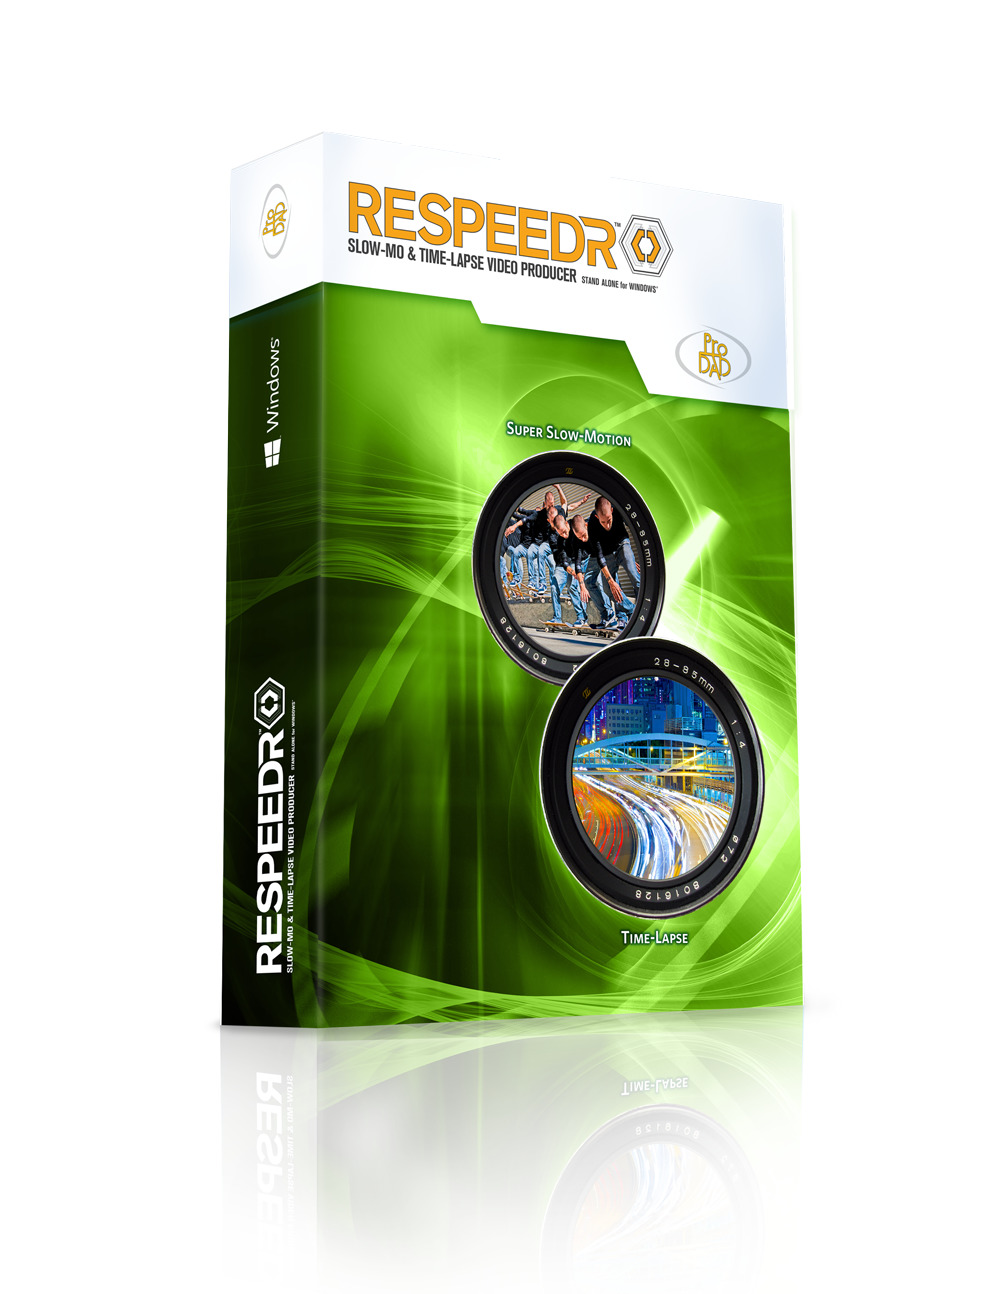 proDAD Releases ReSpeedr Super Slow-Motion & Time-lapse Video Producer Application 21